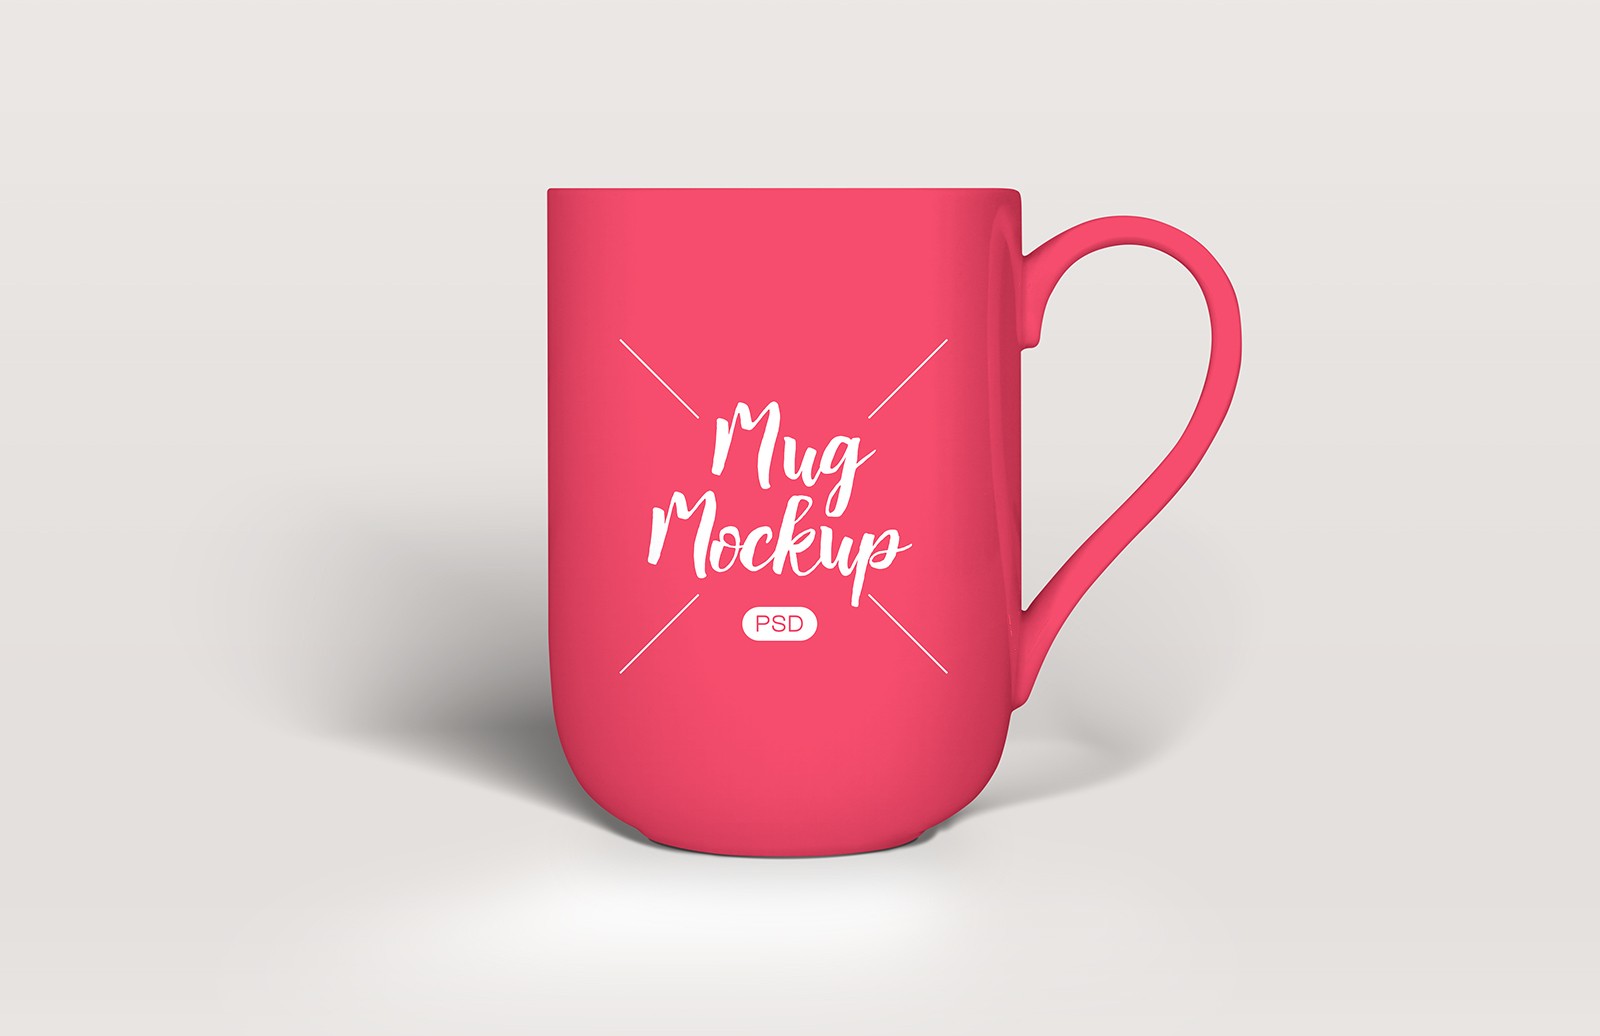 咖啡杯陶瓷杯样机 Coffee Mug Mockup PSD插图(3)